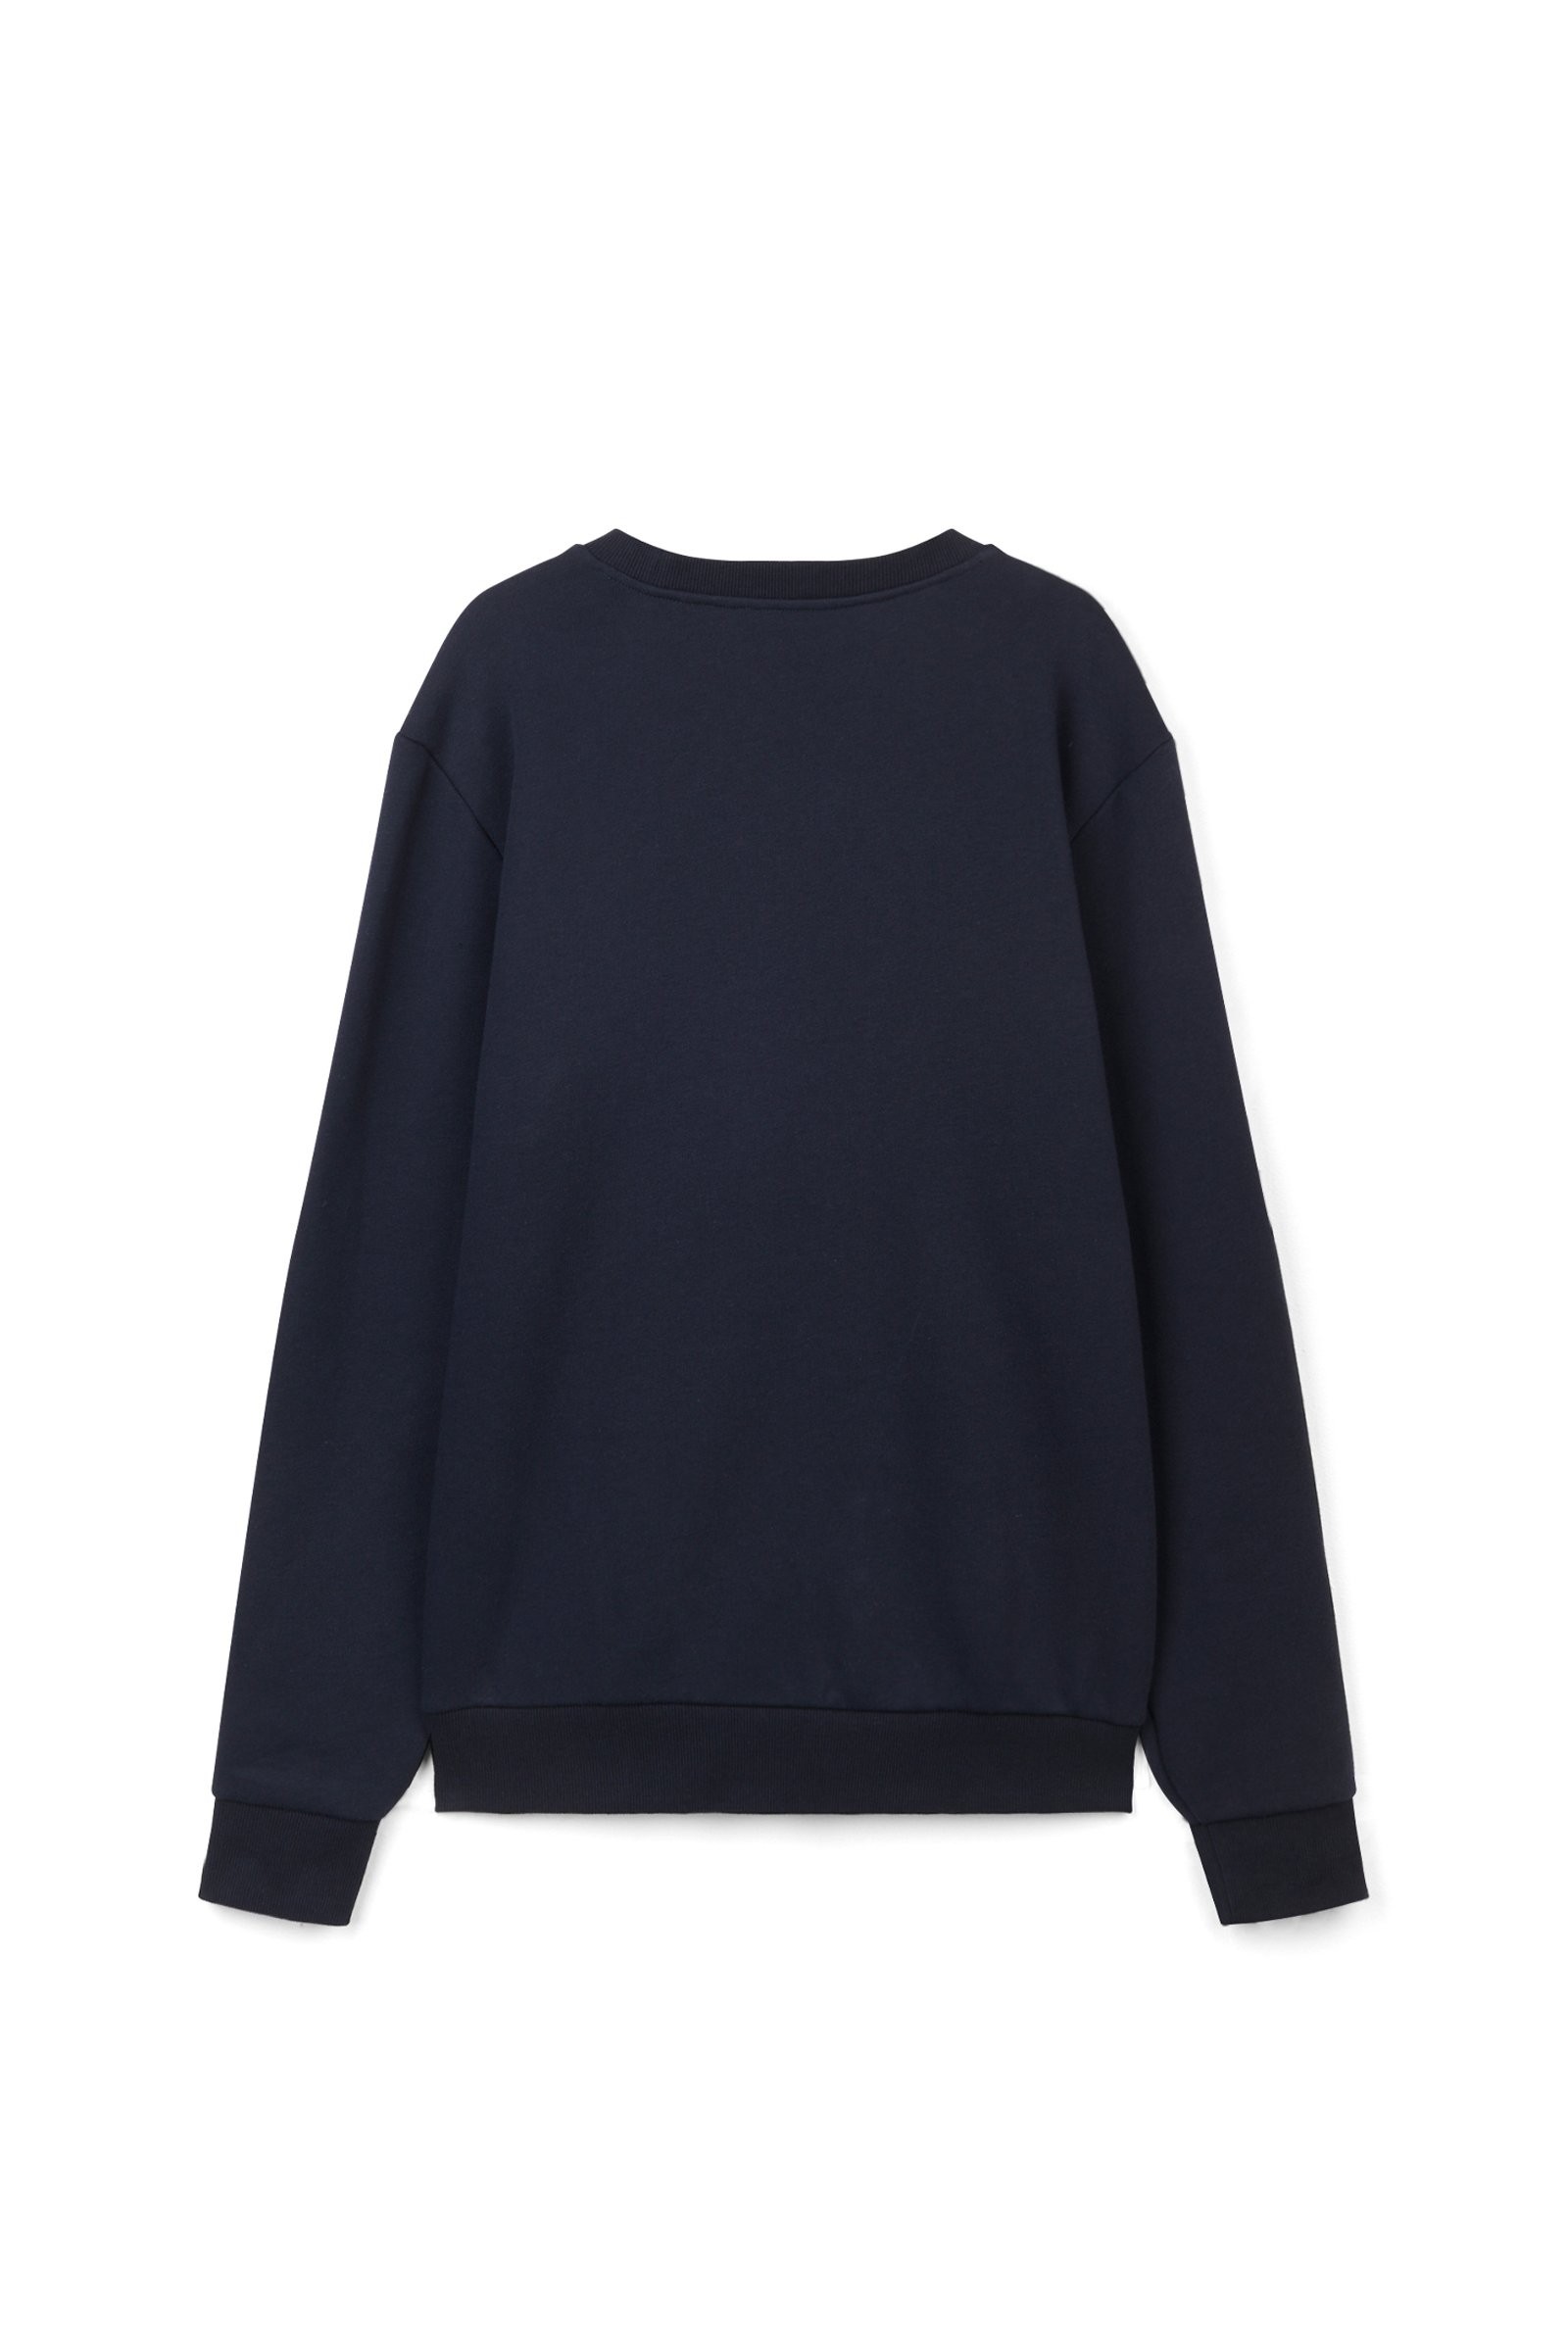 CKS - FIG - sweater - dark blue